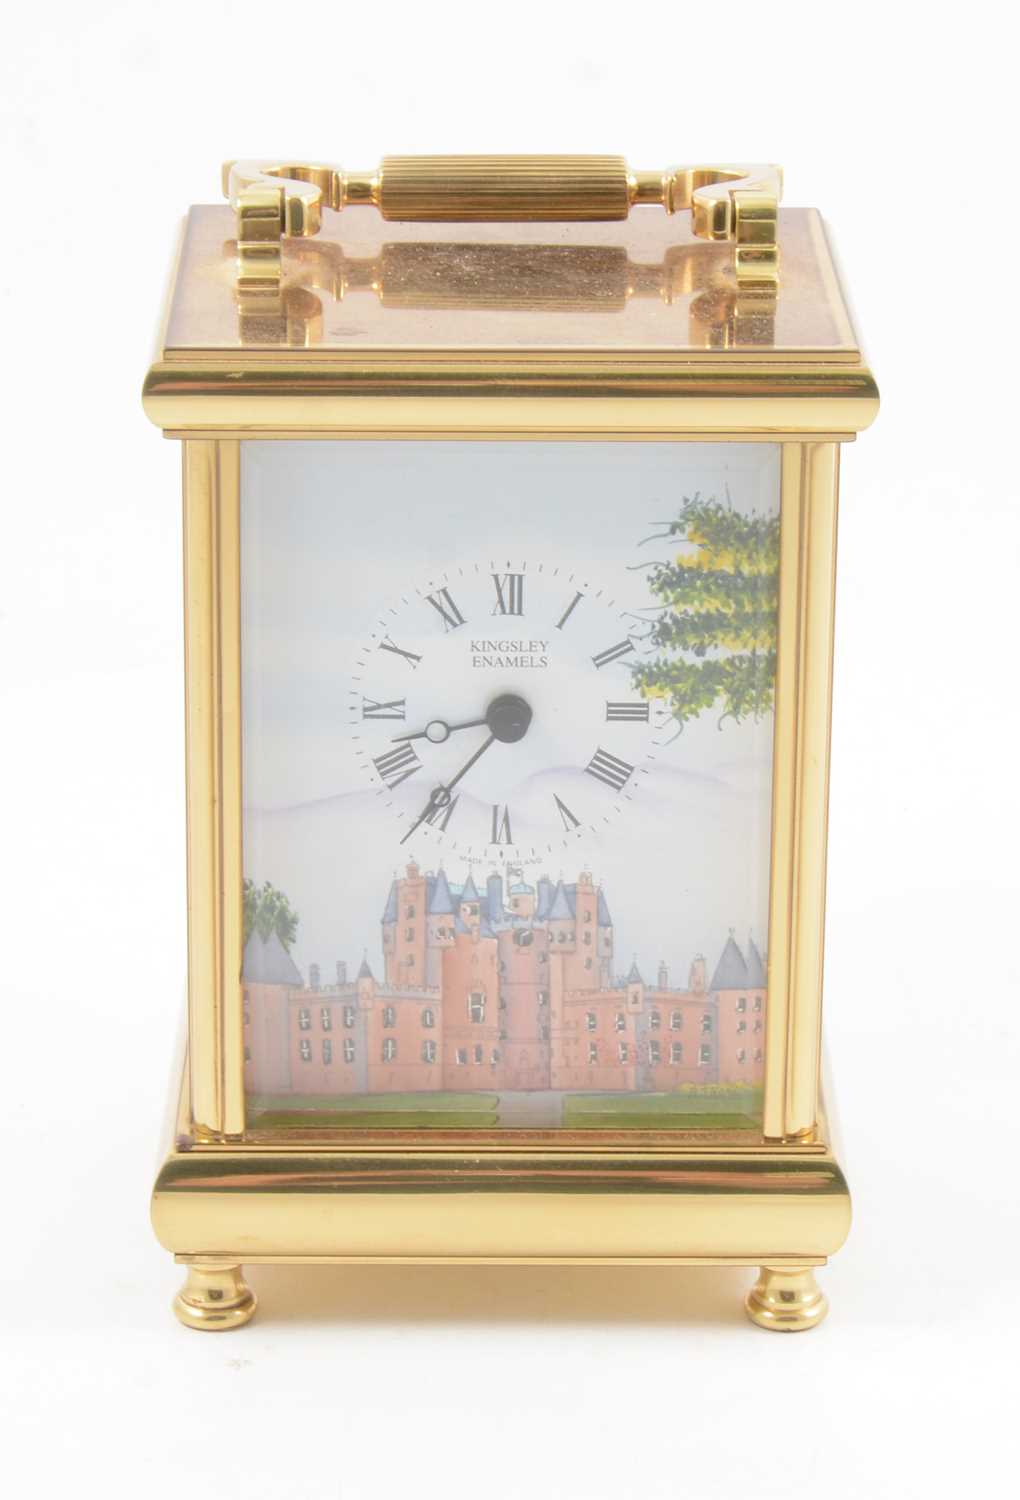 Lot 99 - Modern carriage clock, by Kingsley Enamels